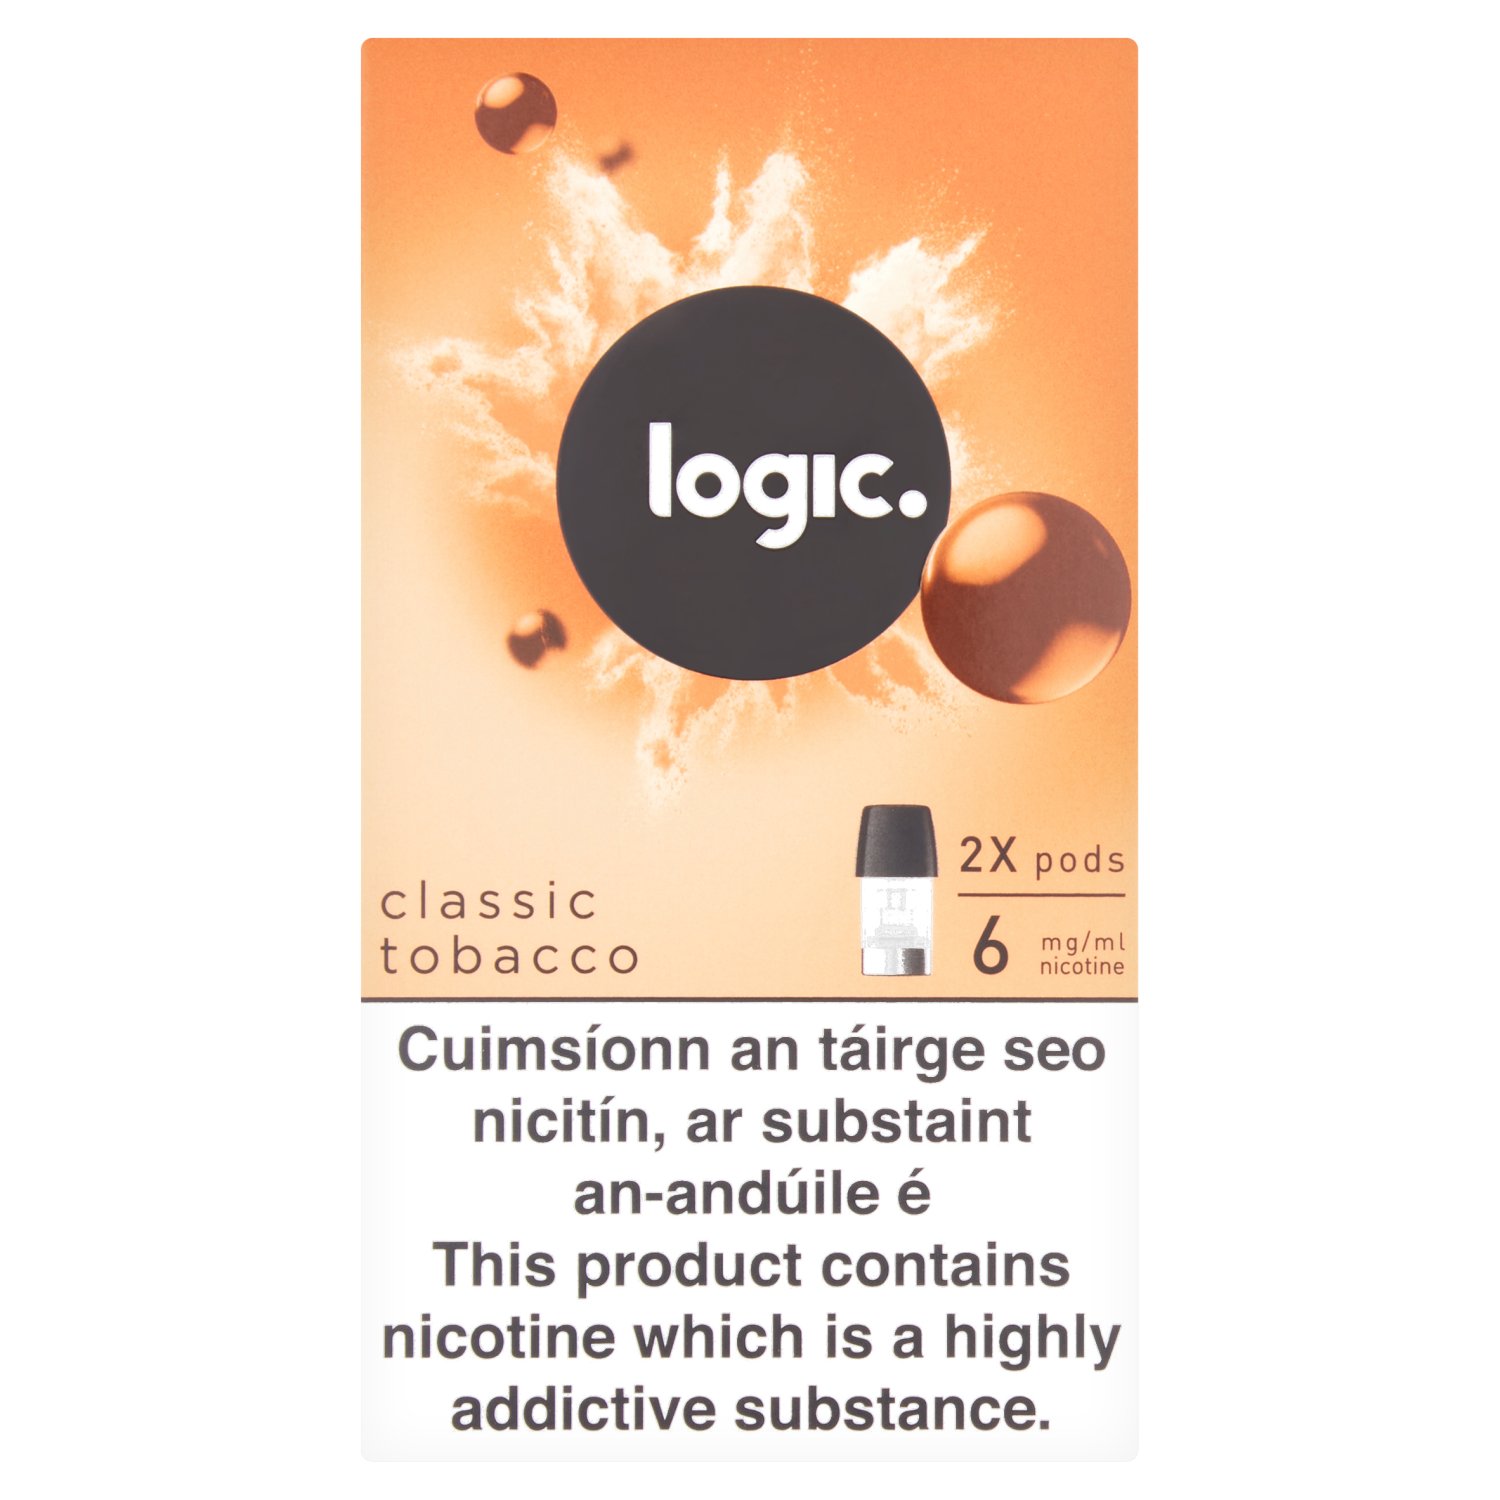 Logic Tobacco E-Liquid Pods 6mg (1 Piece)